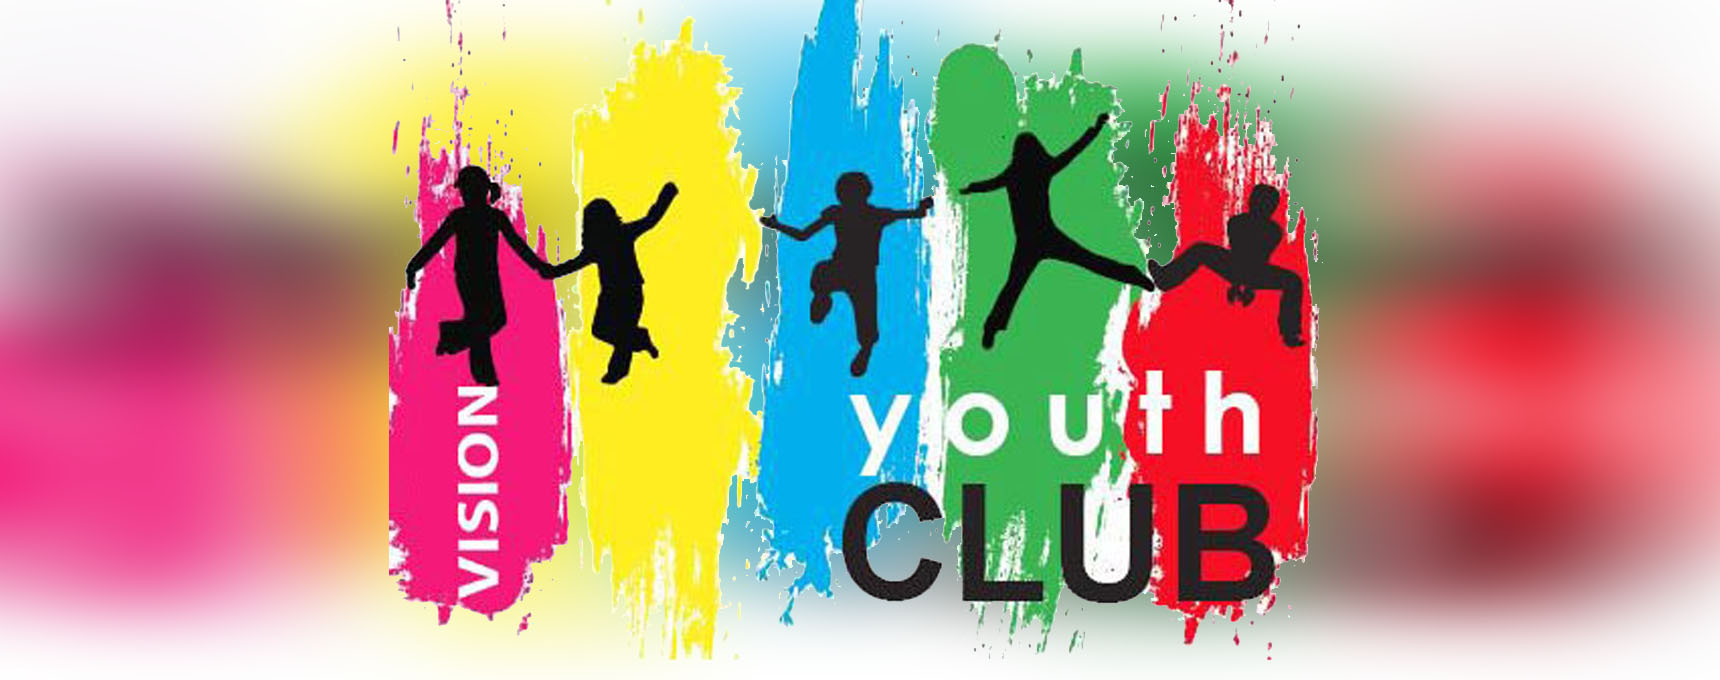 Vision Youth Club logo